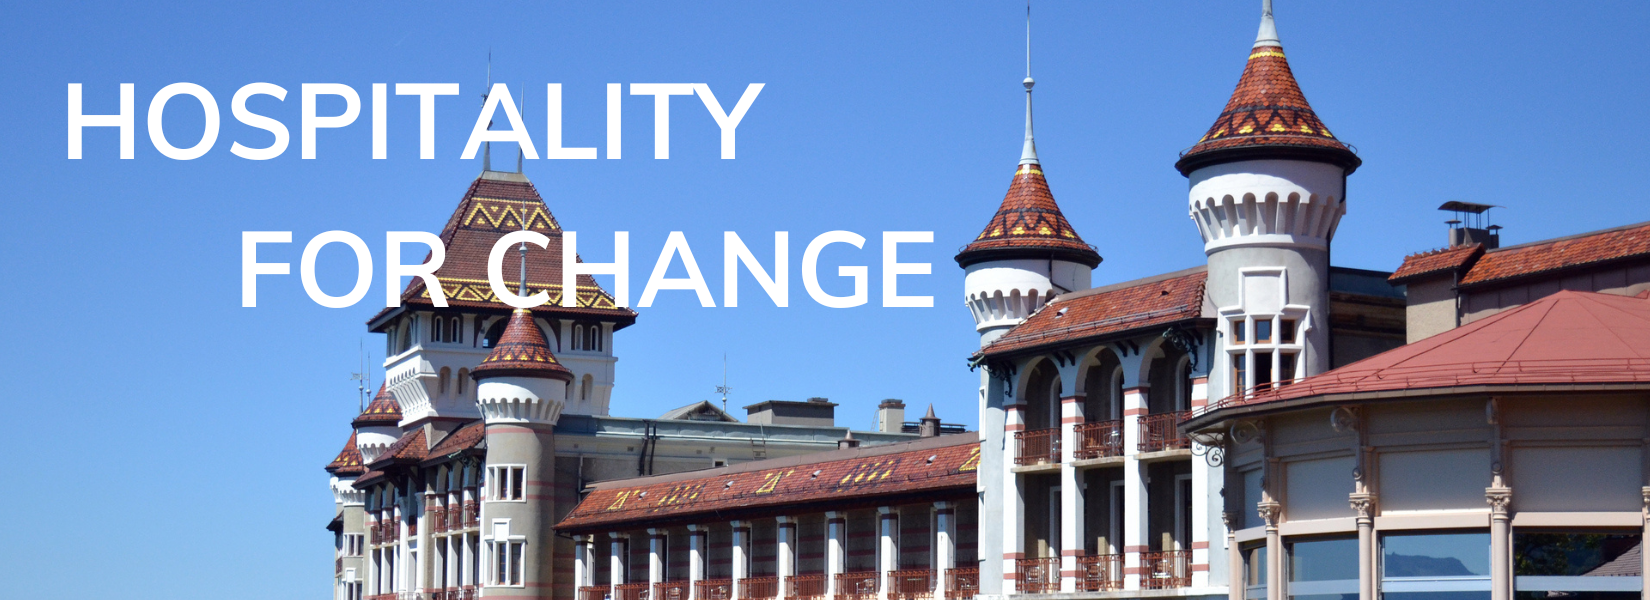 Hospitality for Change website banner